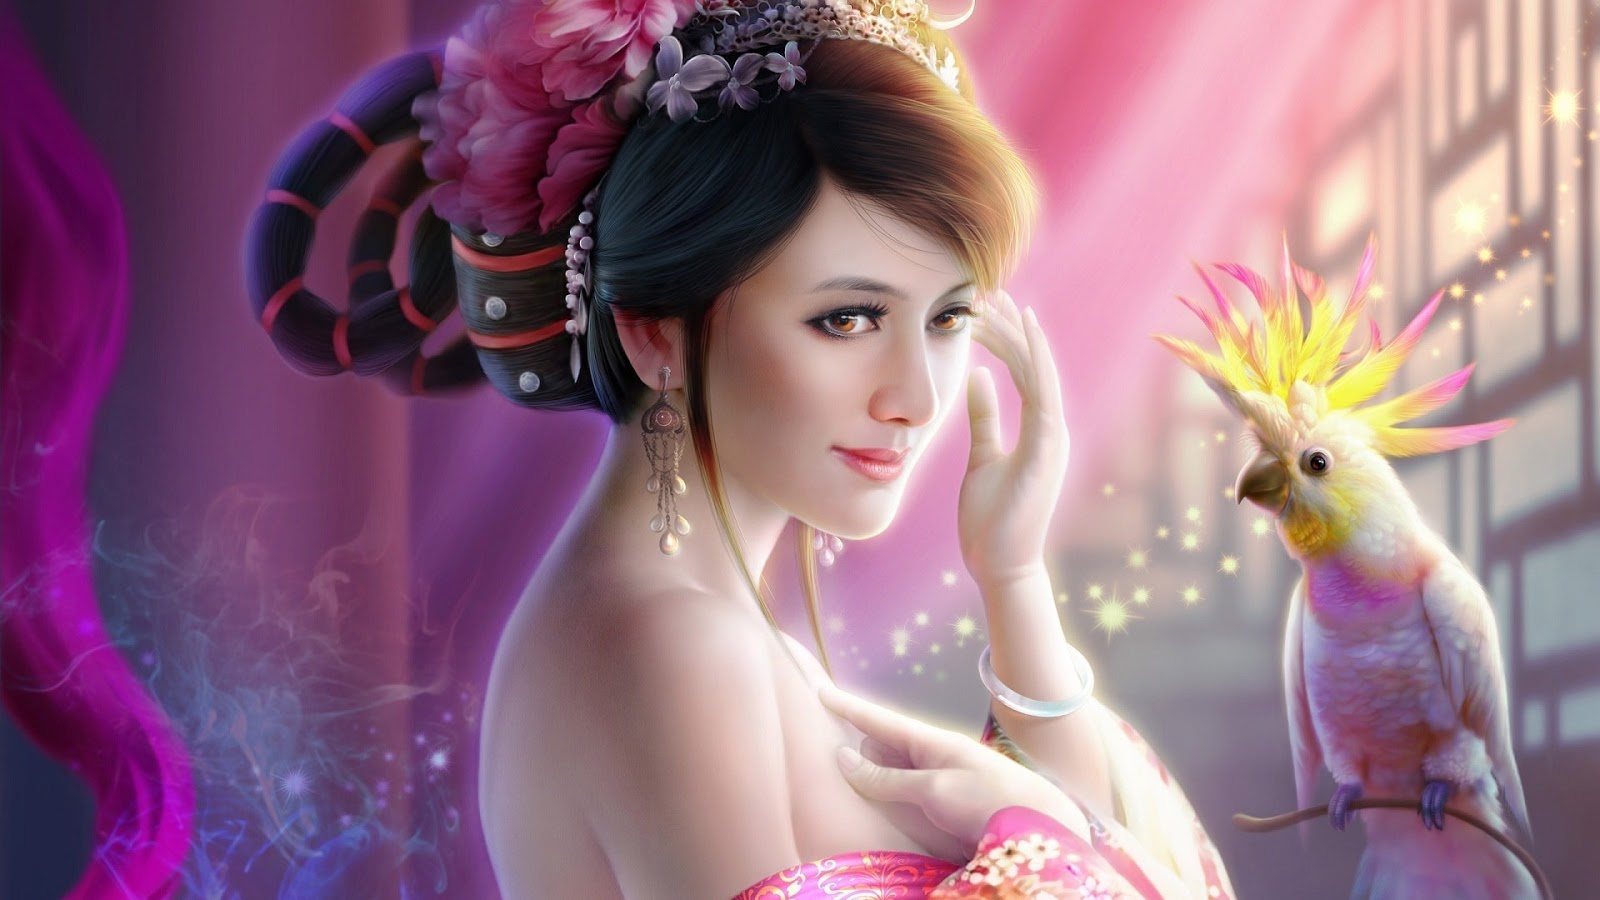 hot wallpaper hd 1080p free download,hair,headpiece,pink,hair accessory,beauty